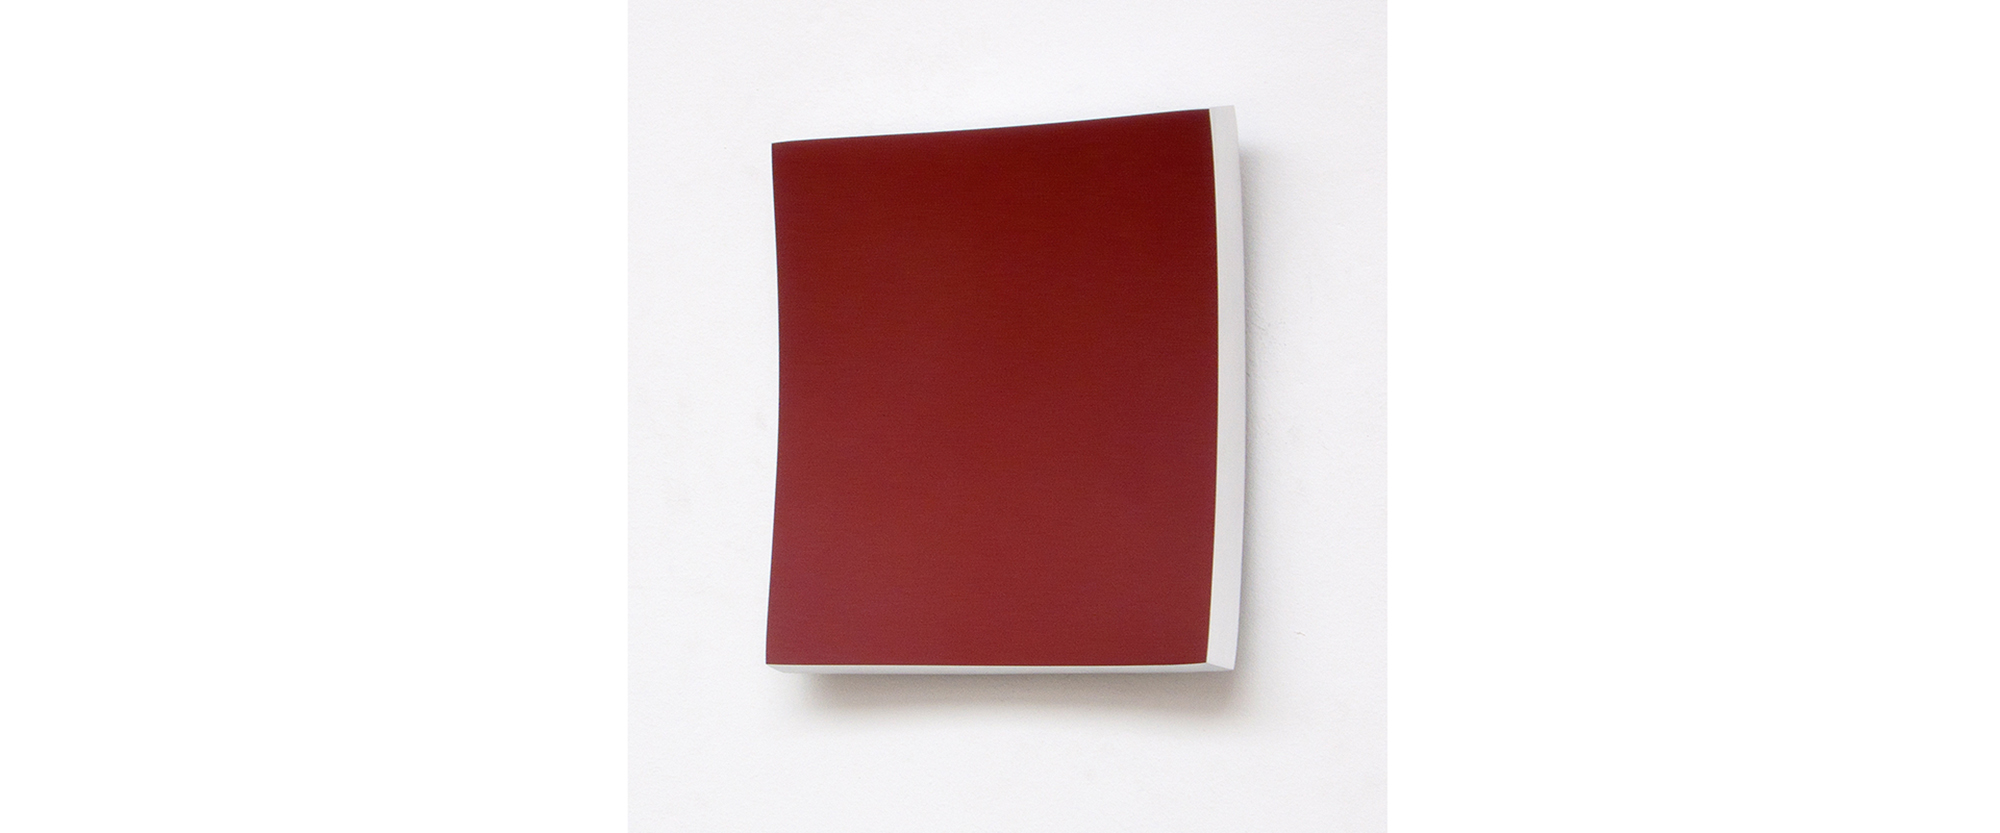 Ohne Titel – 2013, 20/13/573, Aluminium, eloxiert, 22 x 20 x 3,5 cm